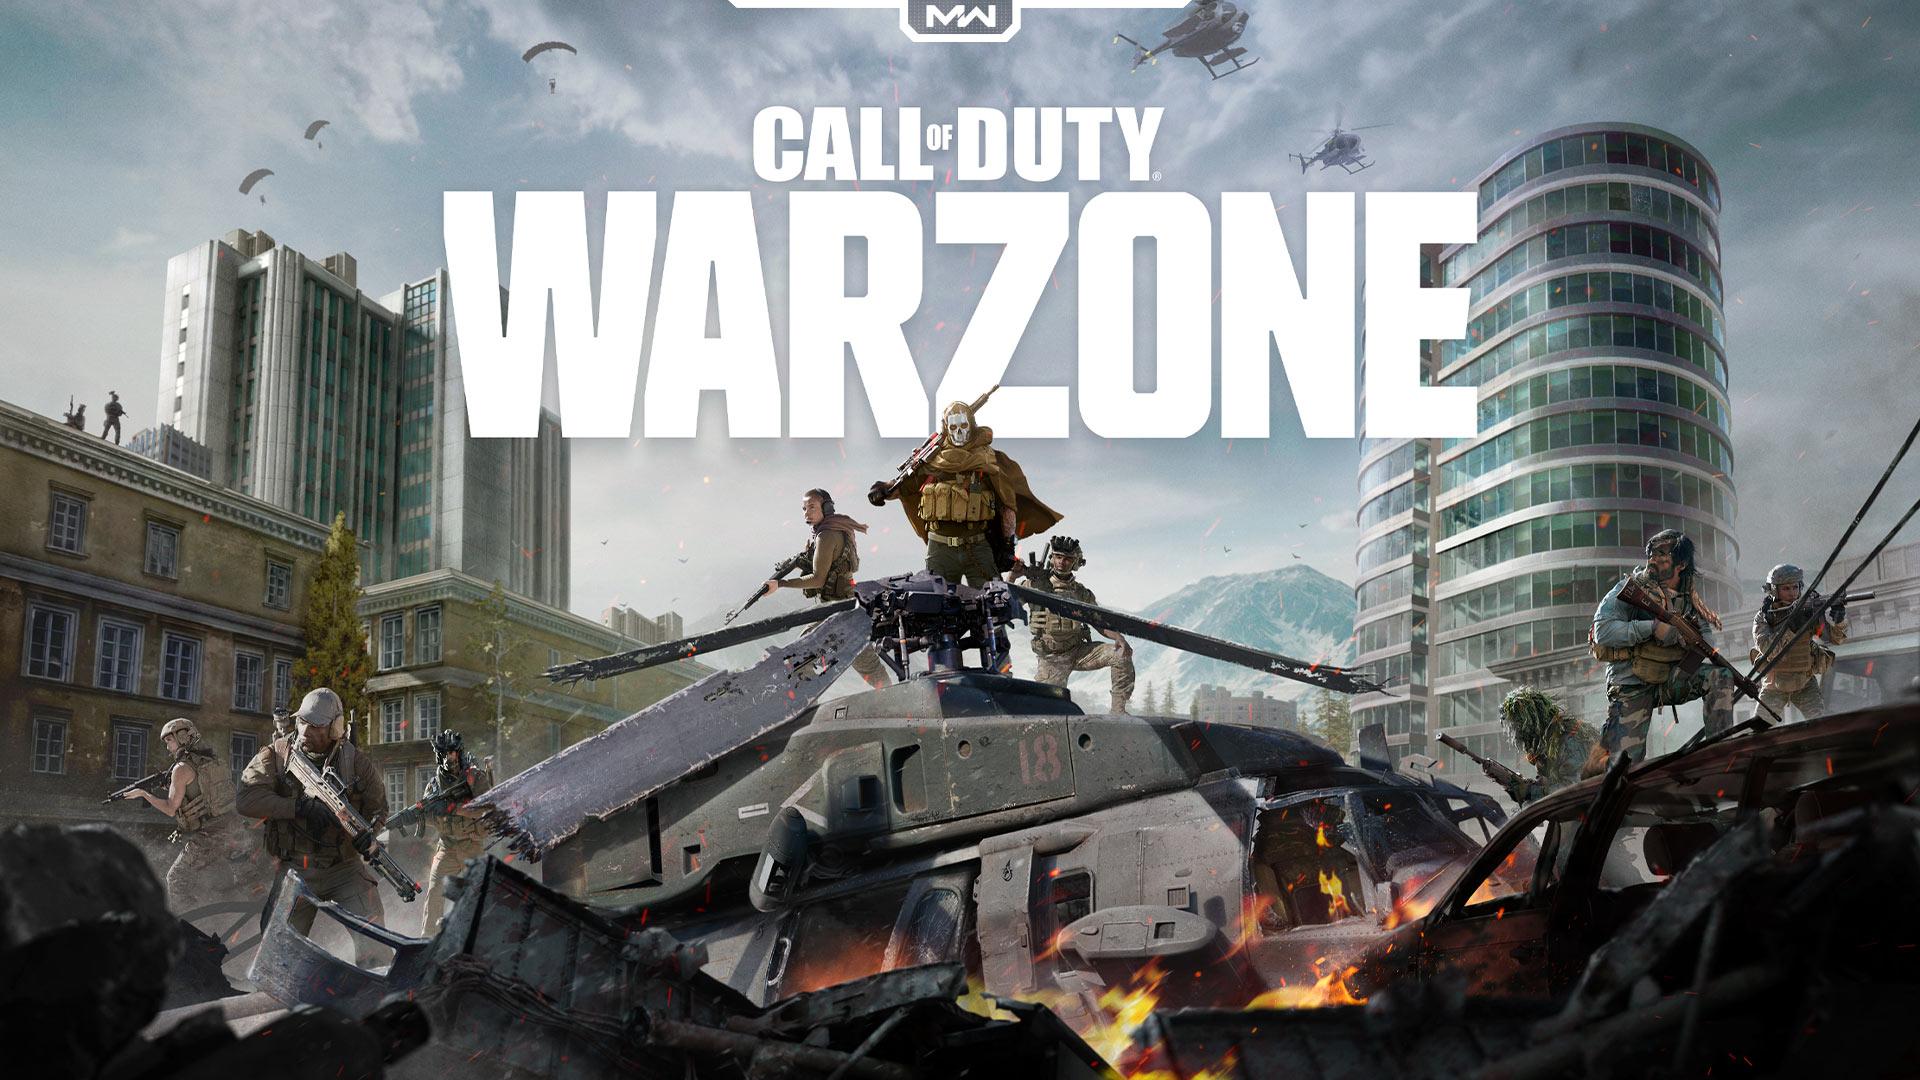 Call of duty: Warzone new skin update